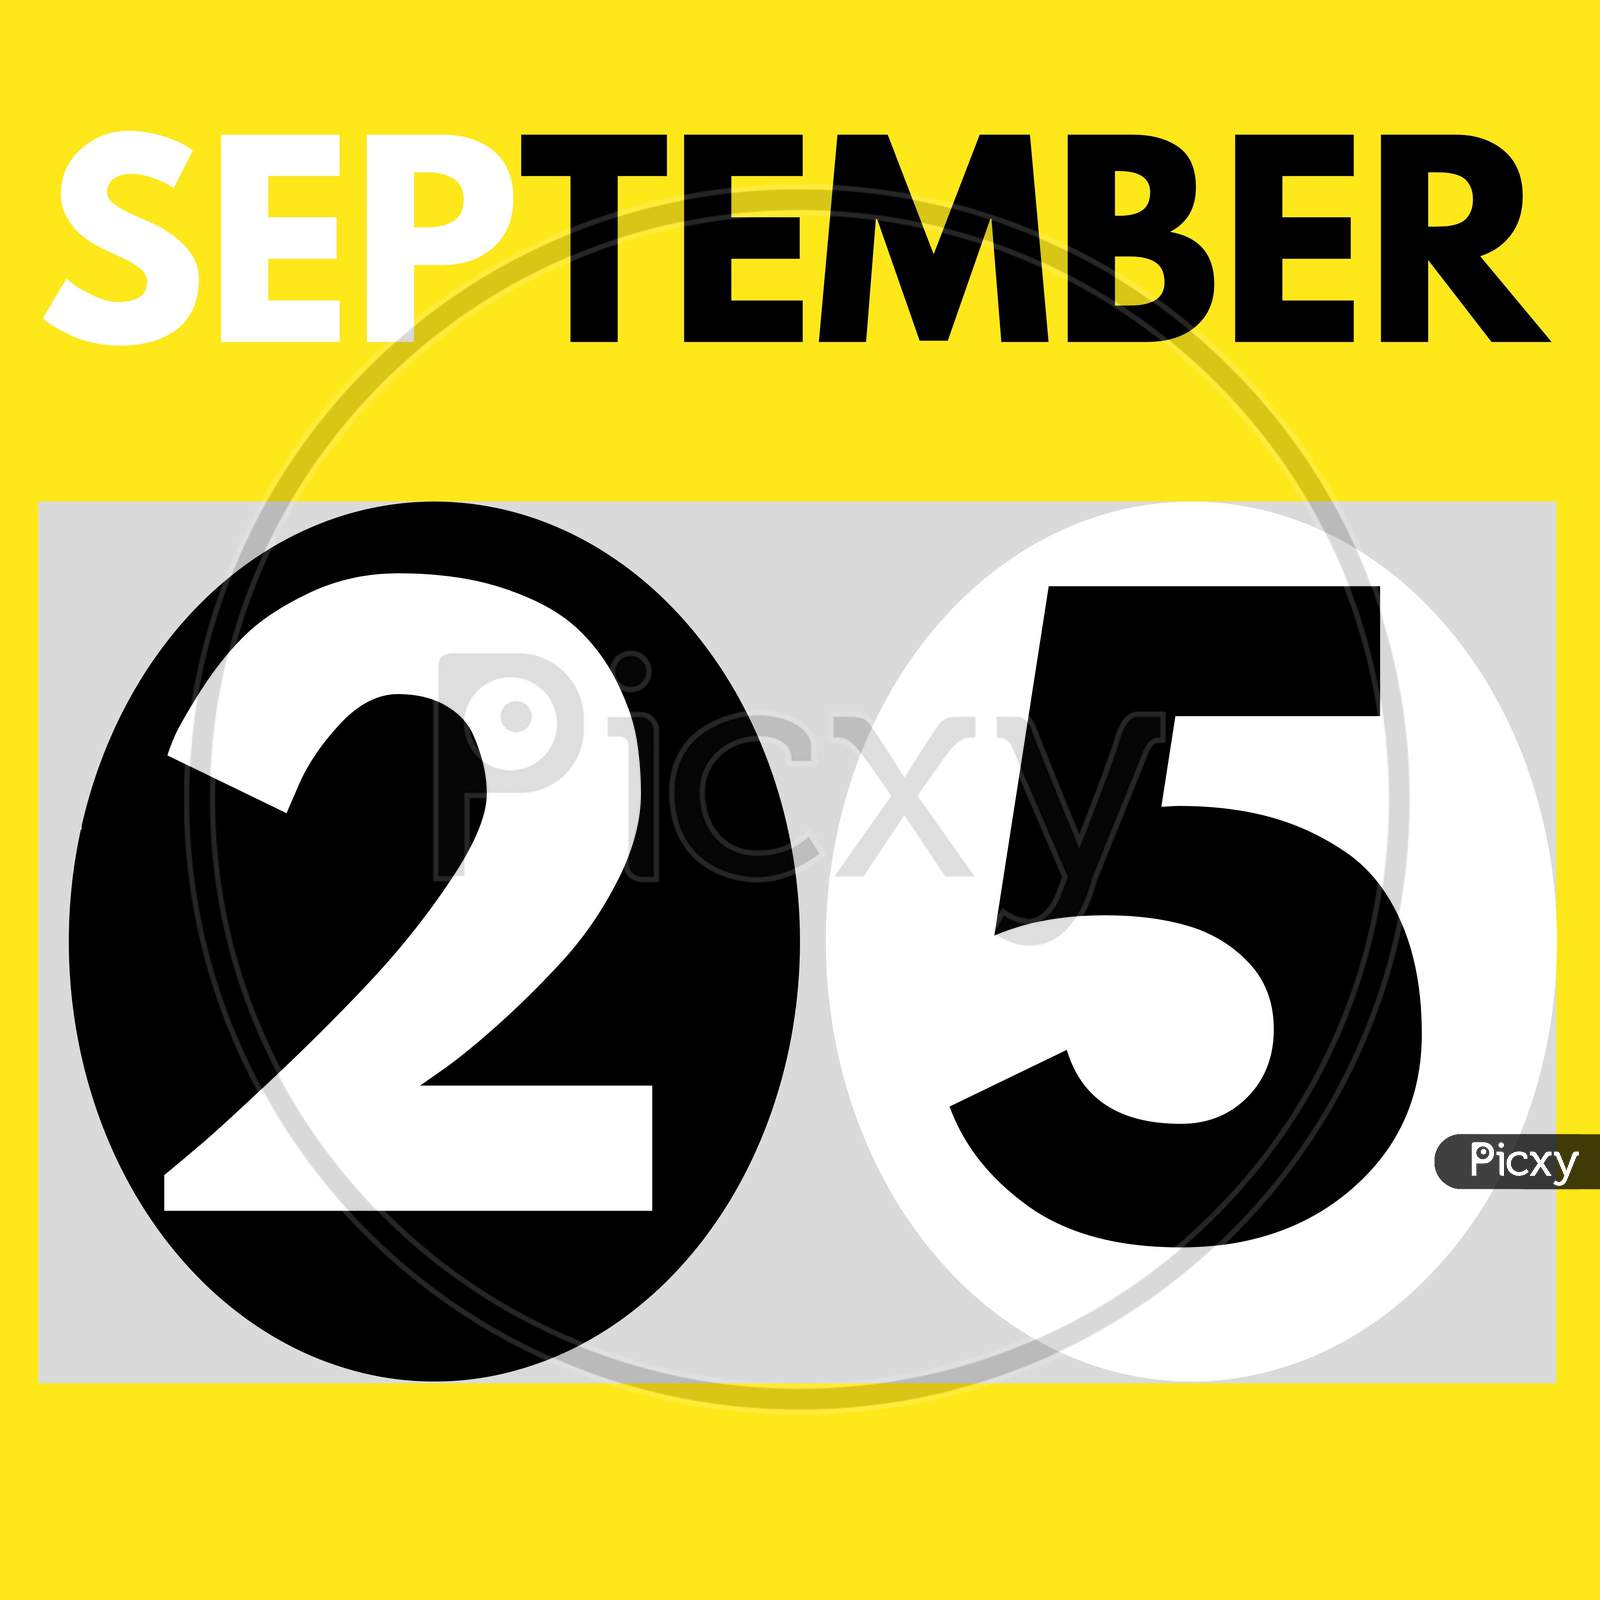 September 25 . Modern Daily Calendar Icon .Date ,Day, Month .Calendar For The Month Of September